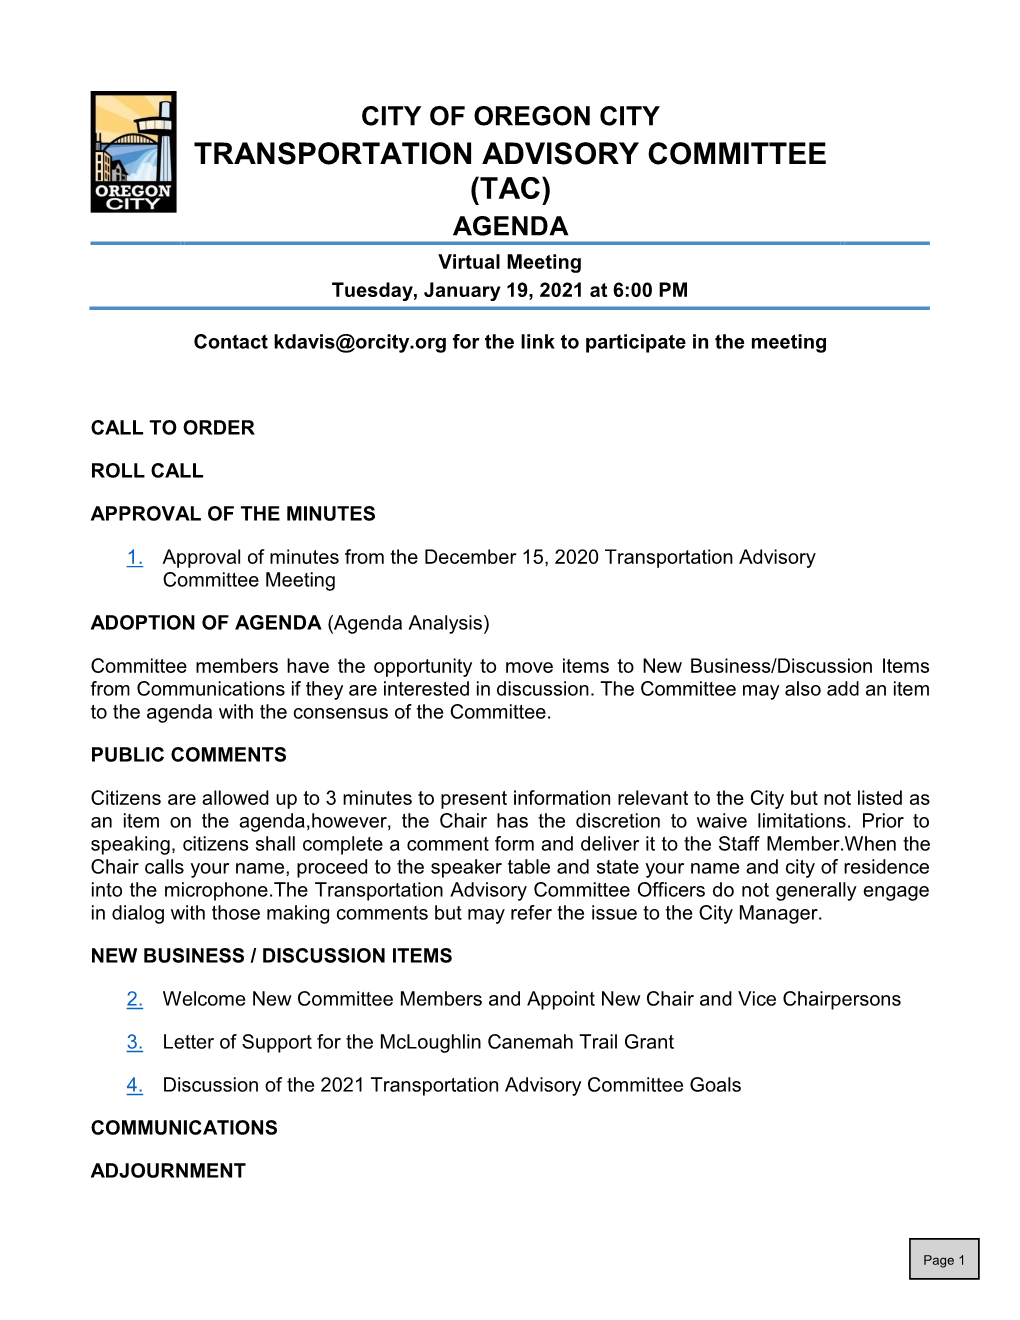 Transportation Advisory Committee (Tac)